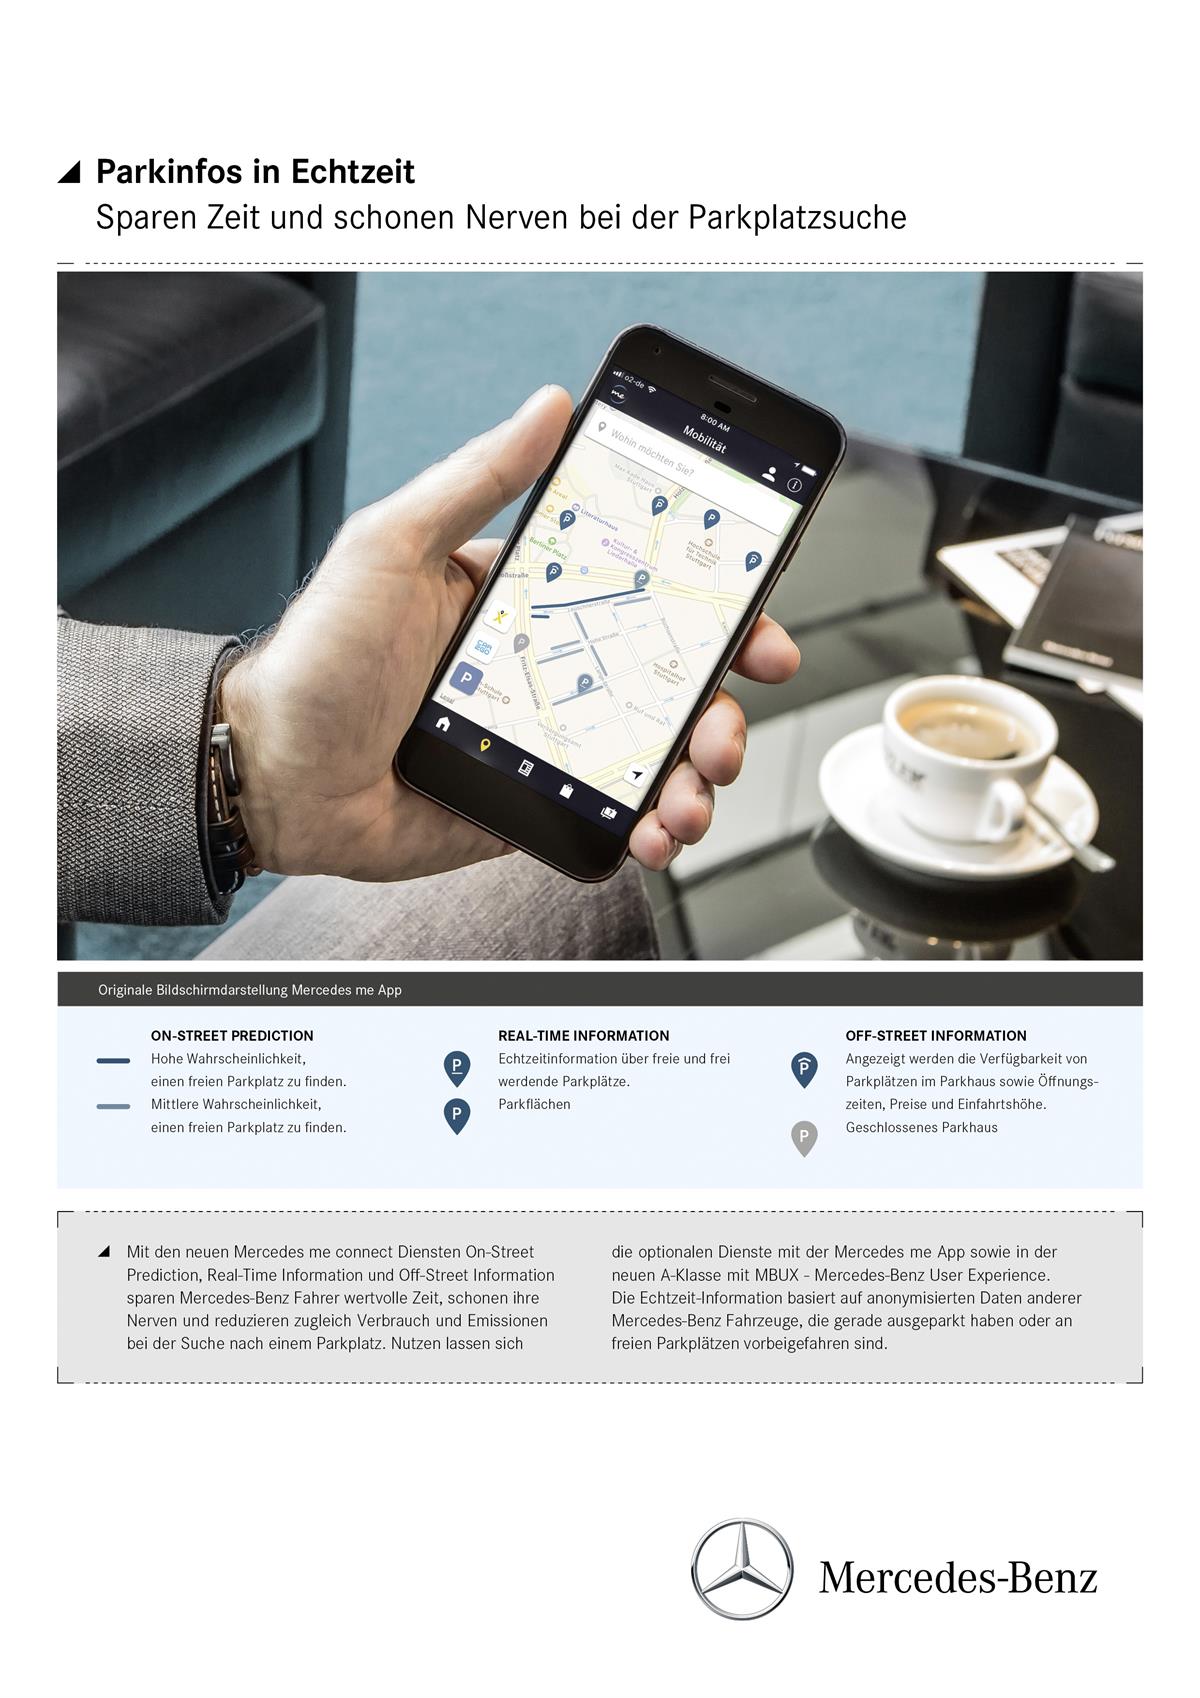 Mercedes-Benz Intelligent Drive: Park-Infos in Echtzeit am Smartphone